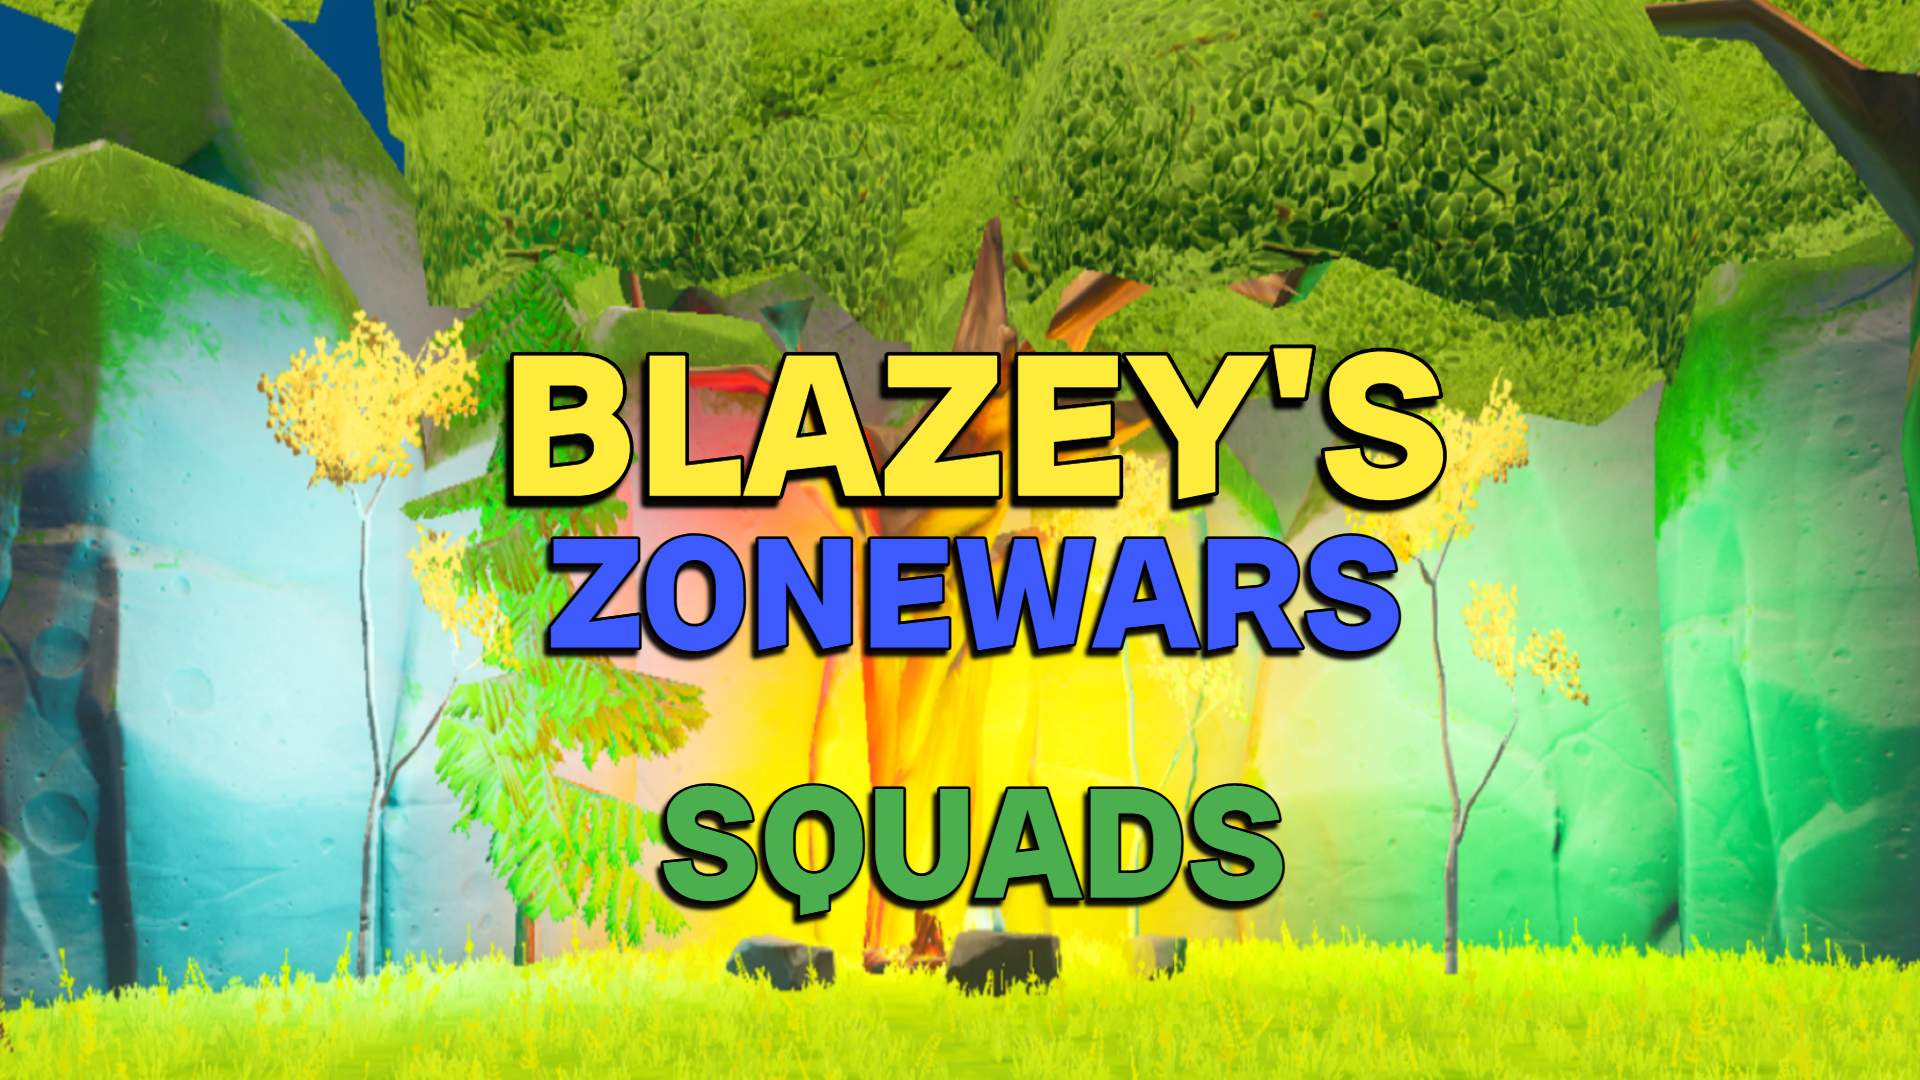 BLAZEY'S ZONEWARS SQUADS